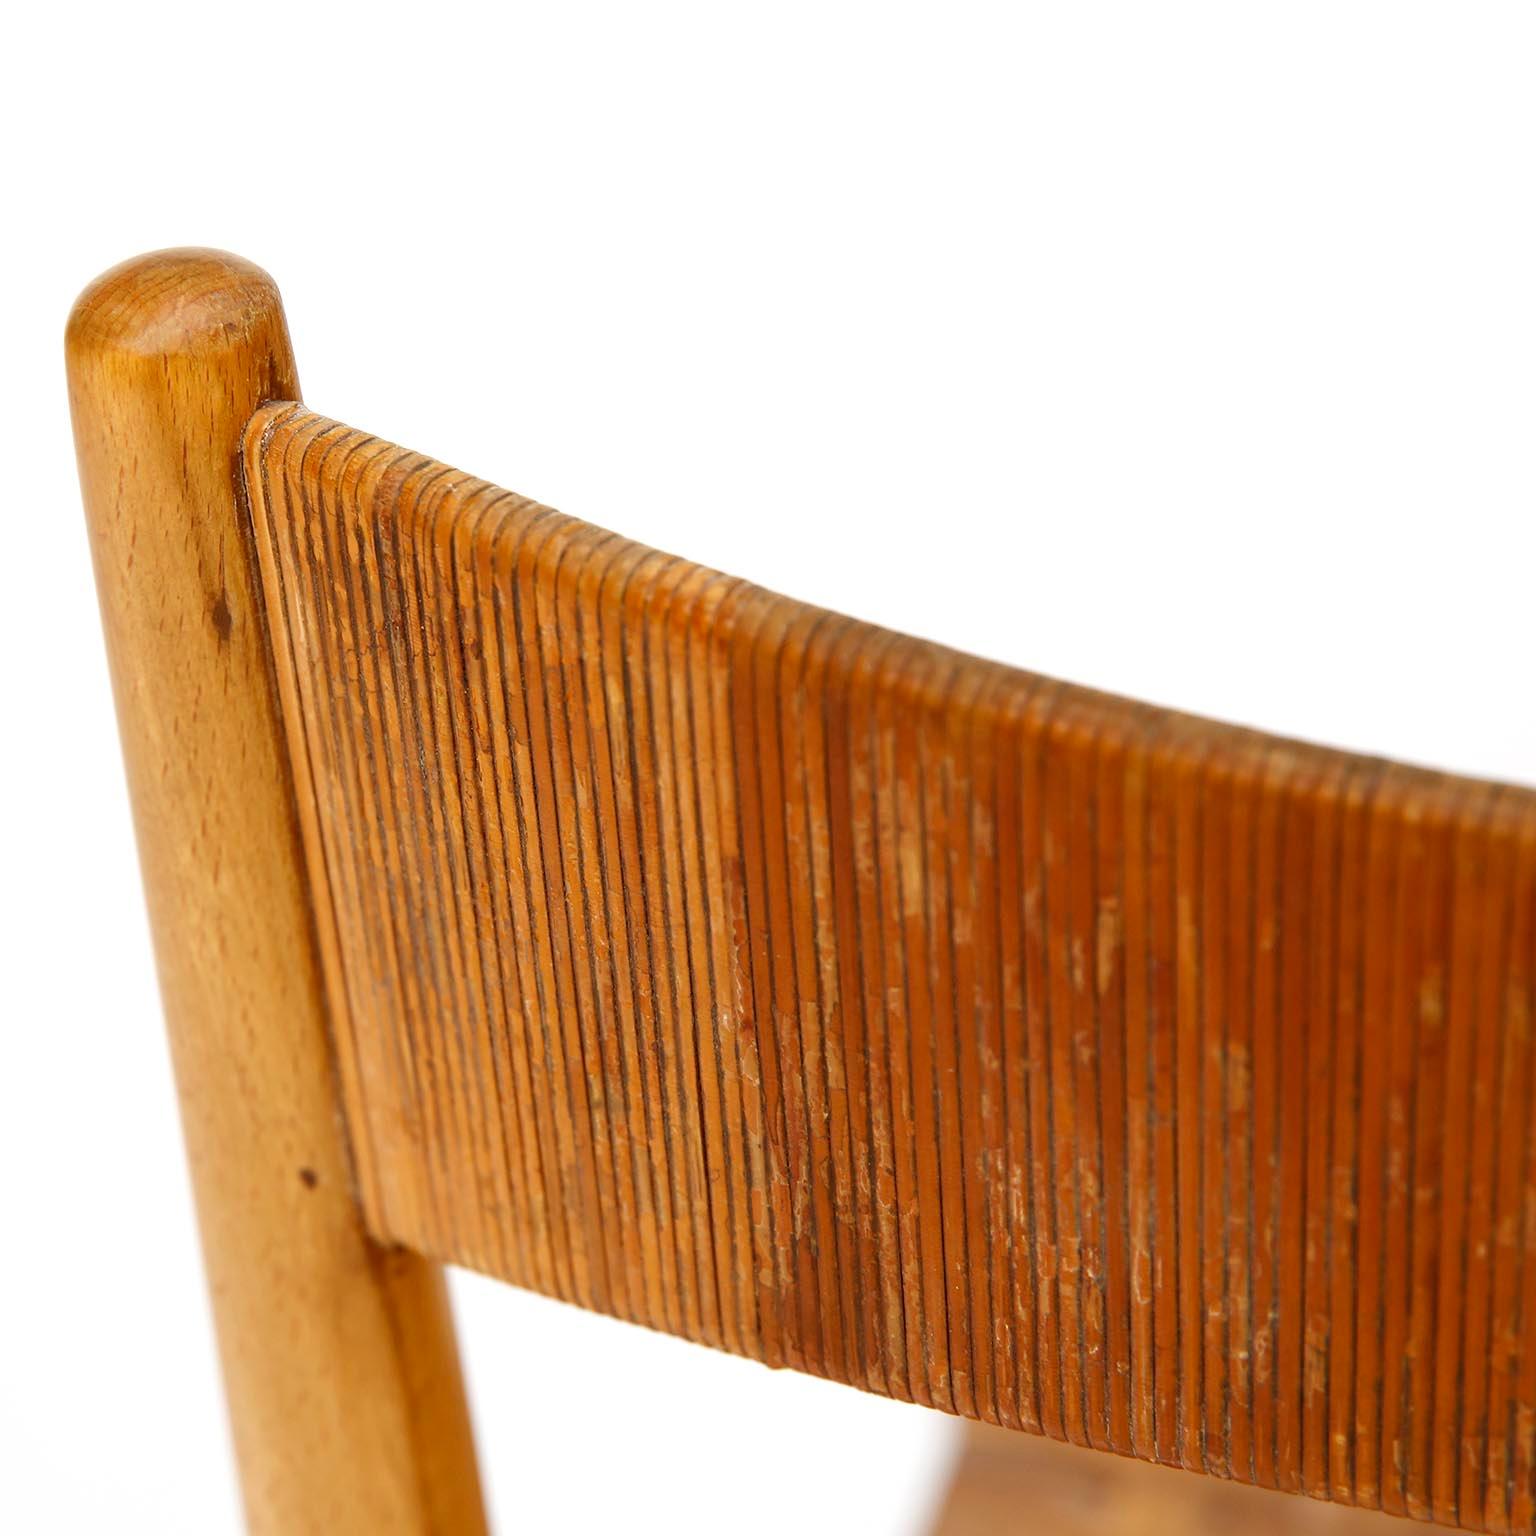 Four Anna-Lülja Praun Chairs, Wood Wicker Cane, 1950s For Sale 10